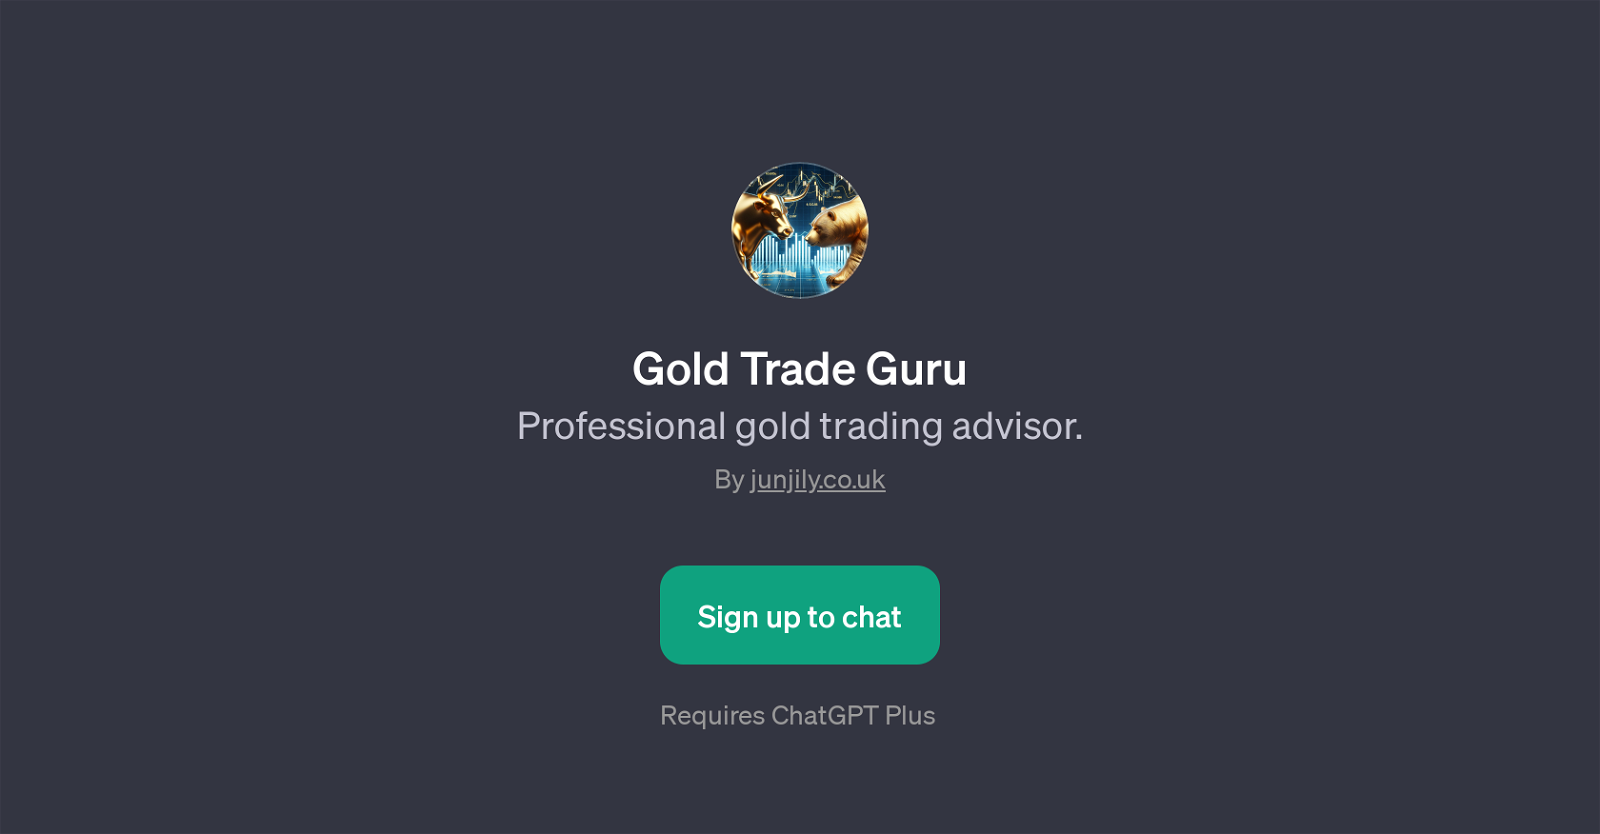 Gold Trade Guru website